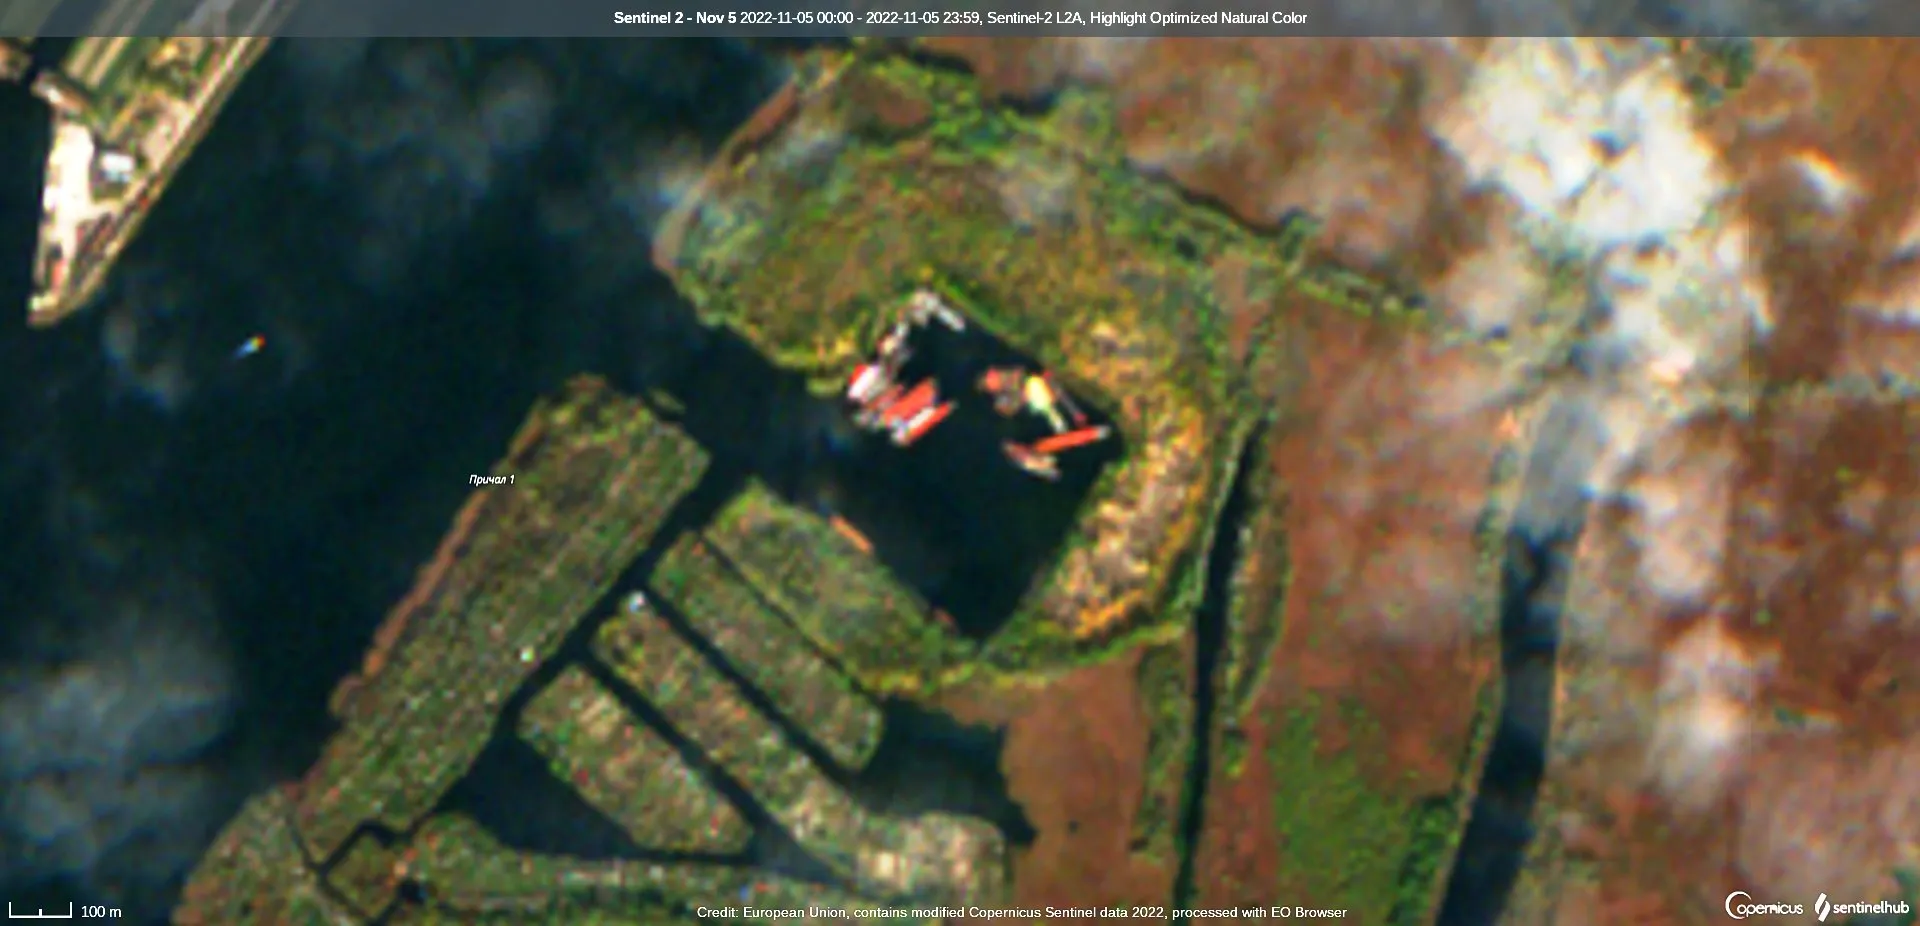 снимок со спутника Херсона за 5 ноября